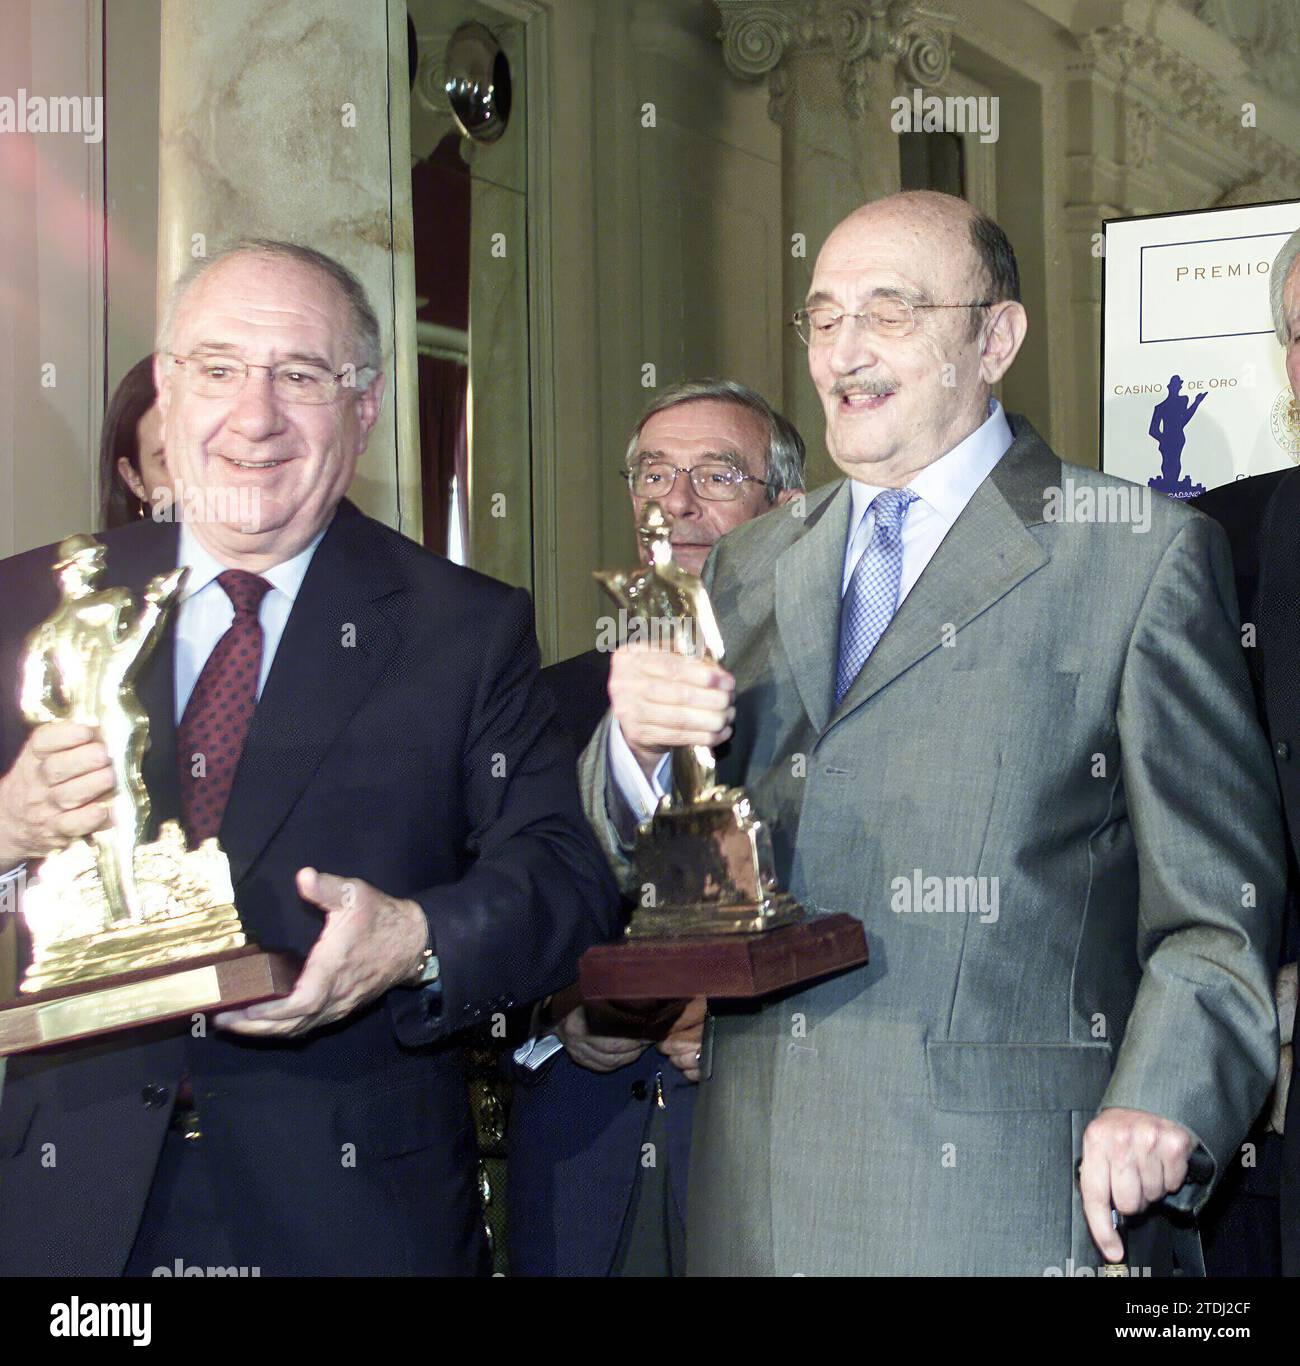 Madrid. 04/28/2003. Actors Tony Leblanc and Alfredo Landa receive the 'Casino de Oro' award from the Madrid Casino. Credit: Album / Archivo ABC / Javier Prieto Stock Photo